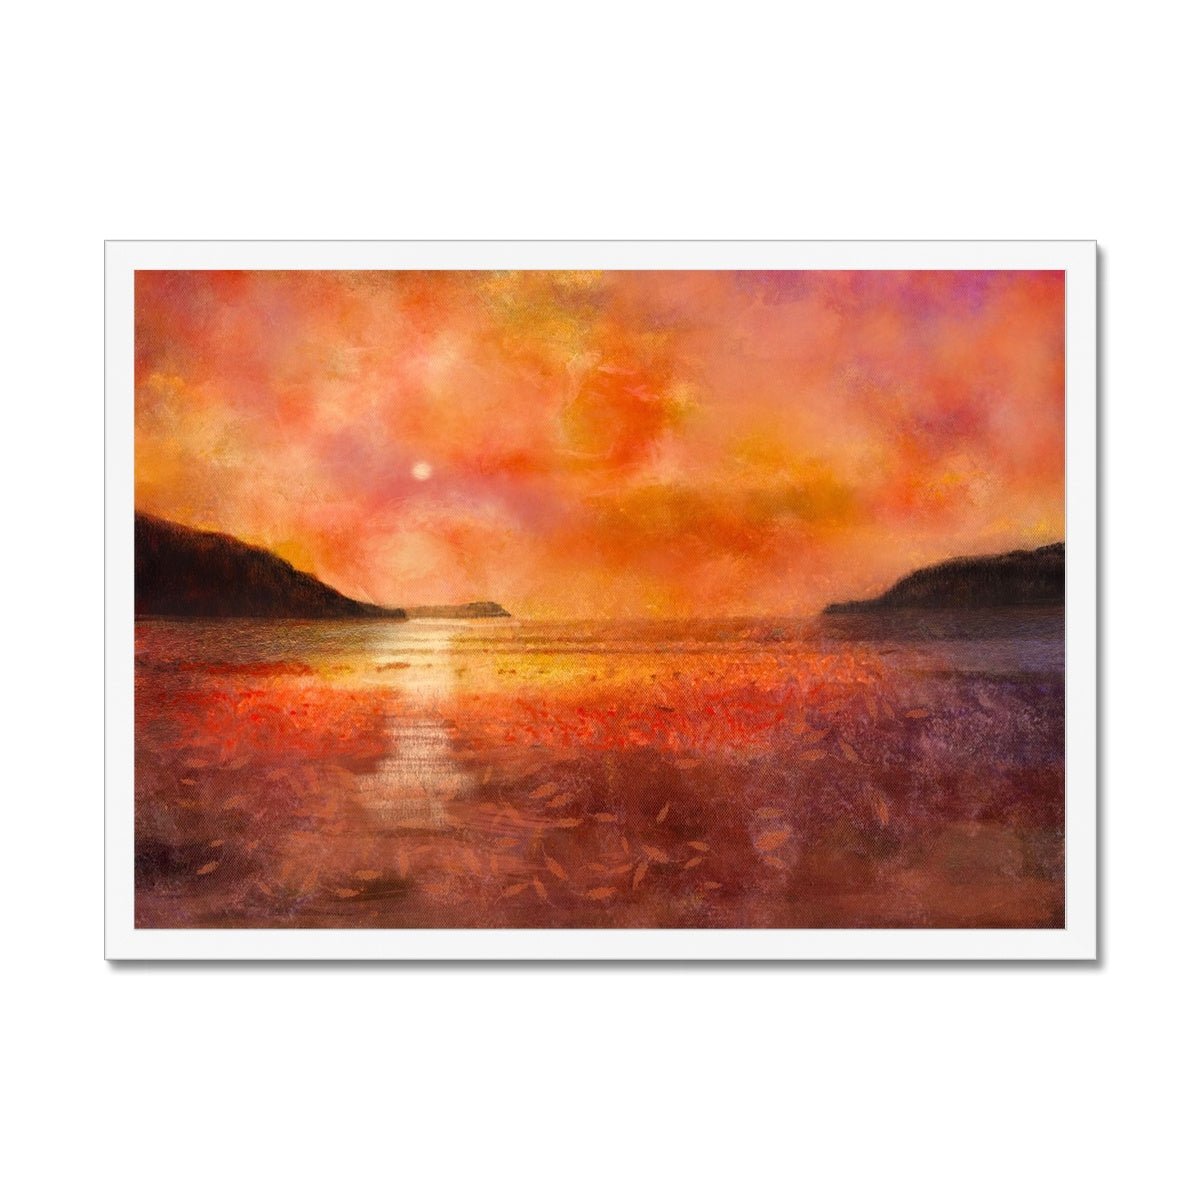 Calgary Beach Sunset Mull Painting | Framed Prints From Scotland-Framed Prints-Hebridean Islands Art Gallery-A2 Landscape-White Frame-Paintings, Prints, Homeware, Art Gifts From Scotland By Scottish Artist Kevin Hunter